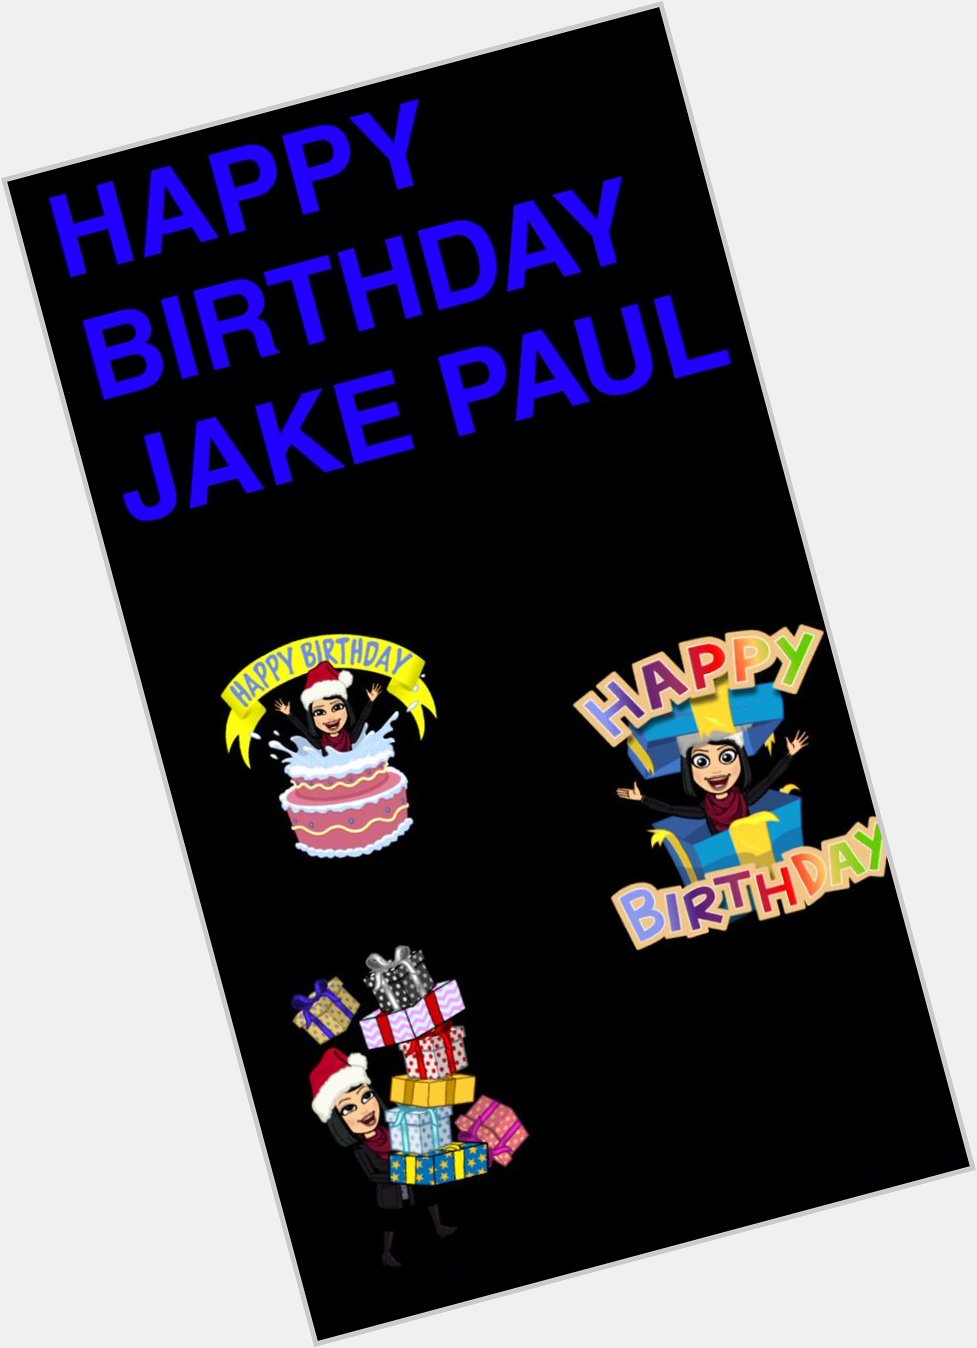 Happy birthday Jake Paul keep on working hard 